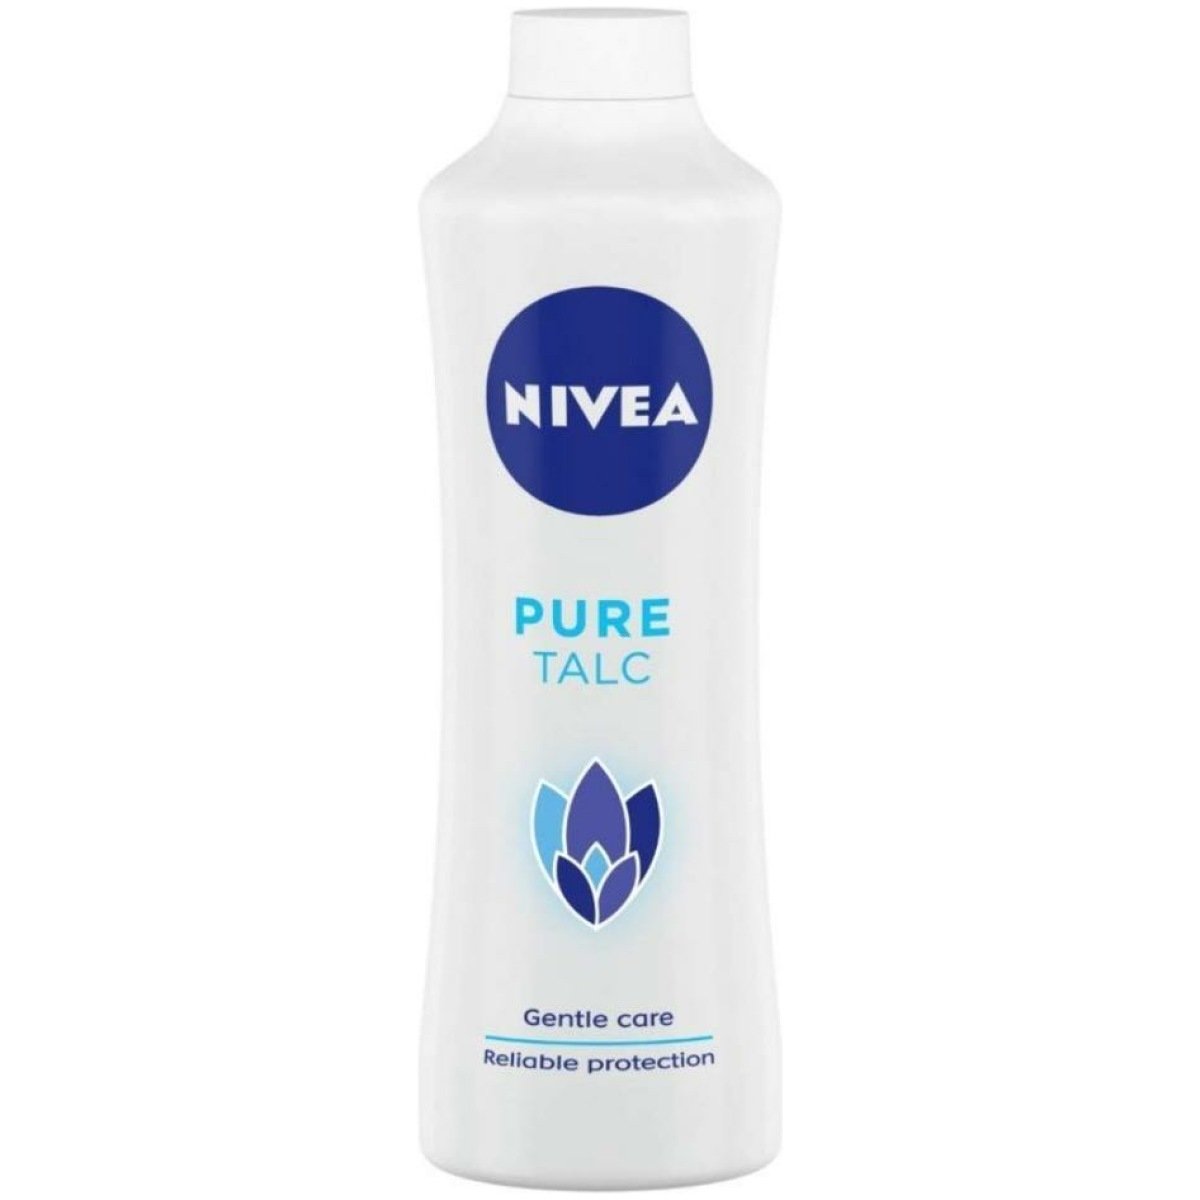 Nivea Talcum Powder Fragrance & Reliable Protection 400 g